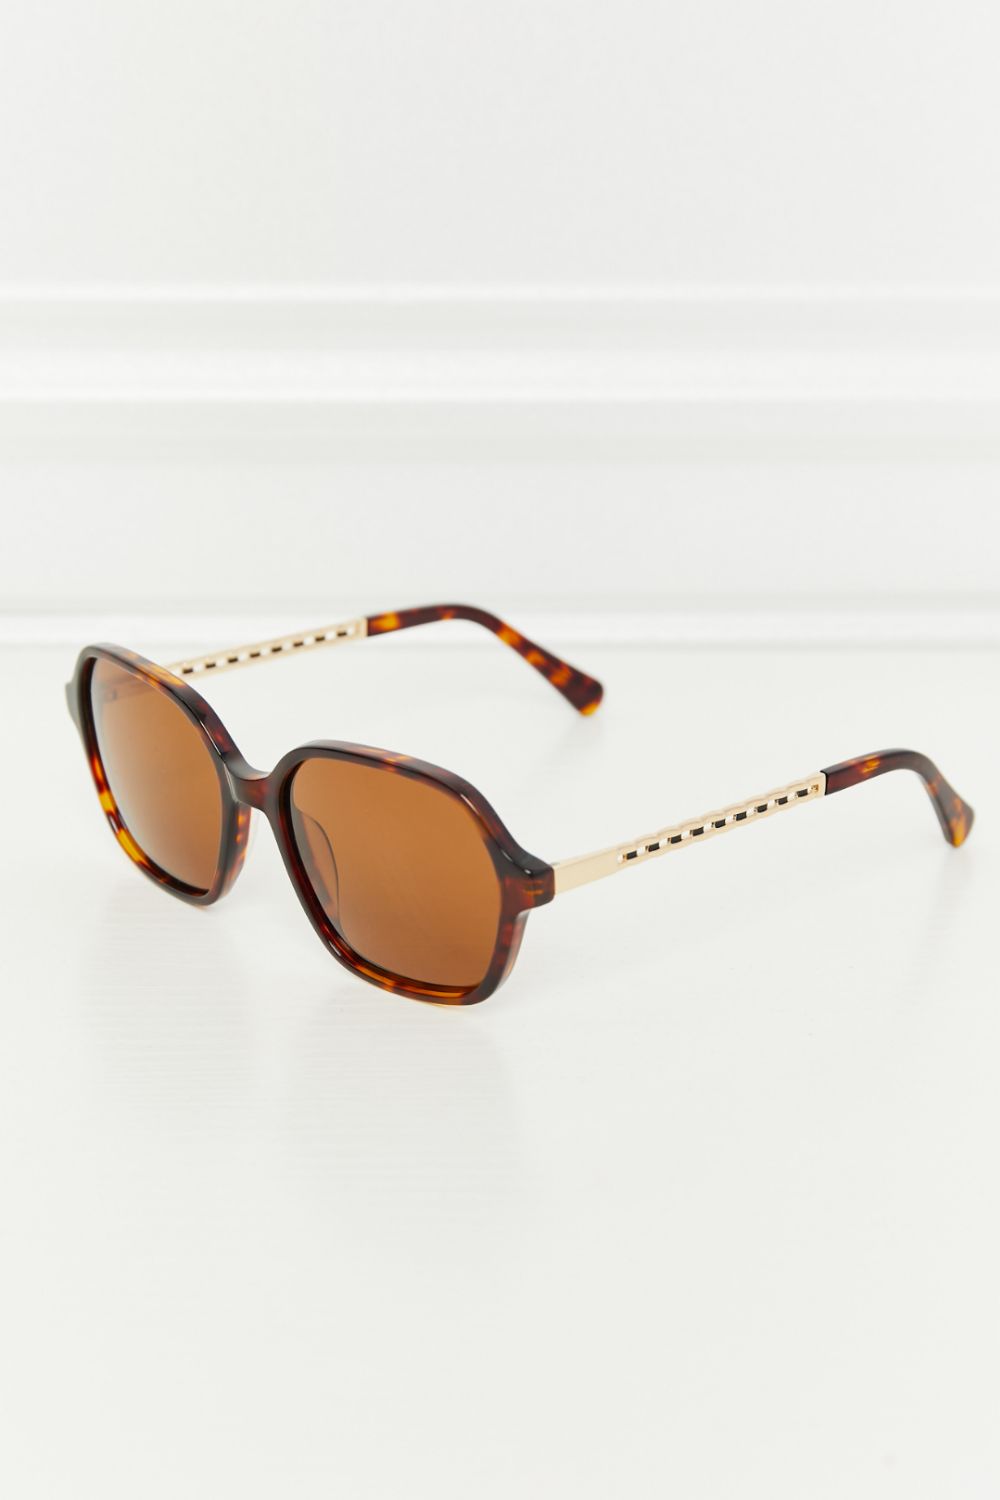 TAC Polarization Lens Full Rim Sunglasses - Shop women apparel, Jewelry, bath & beauty products online - Arwen's Boutique